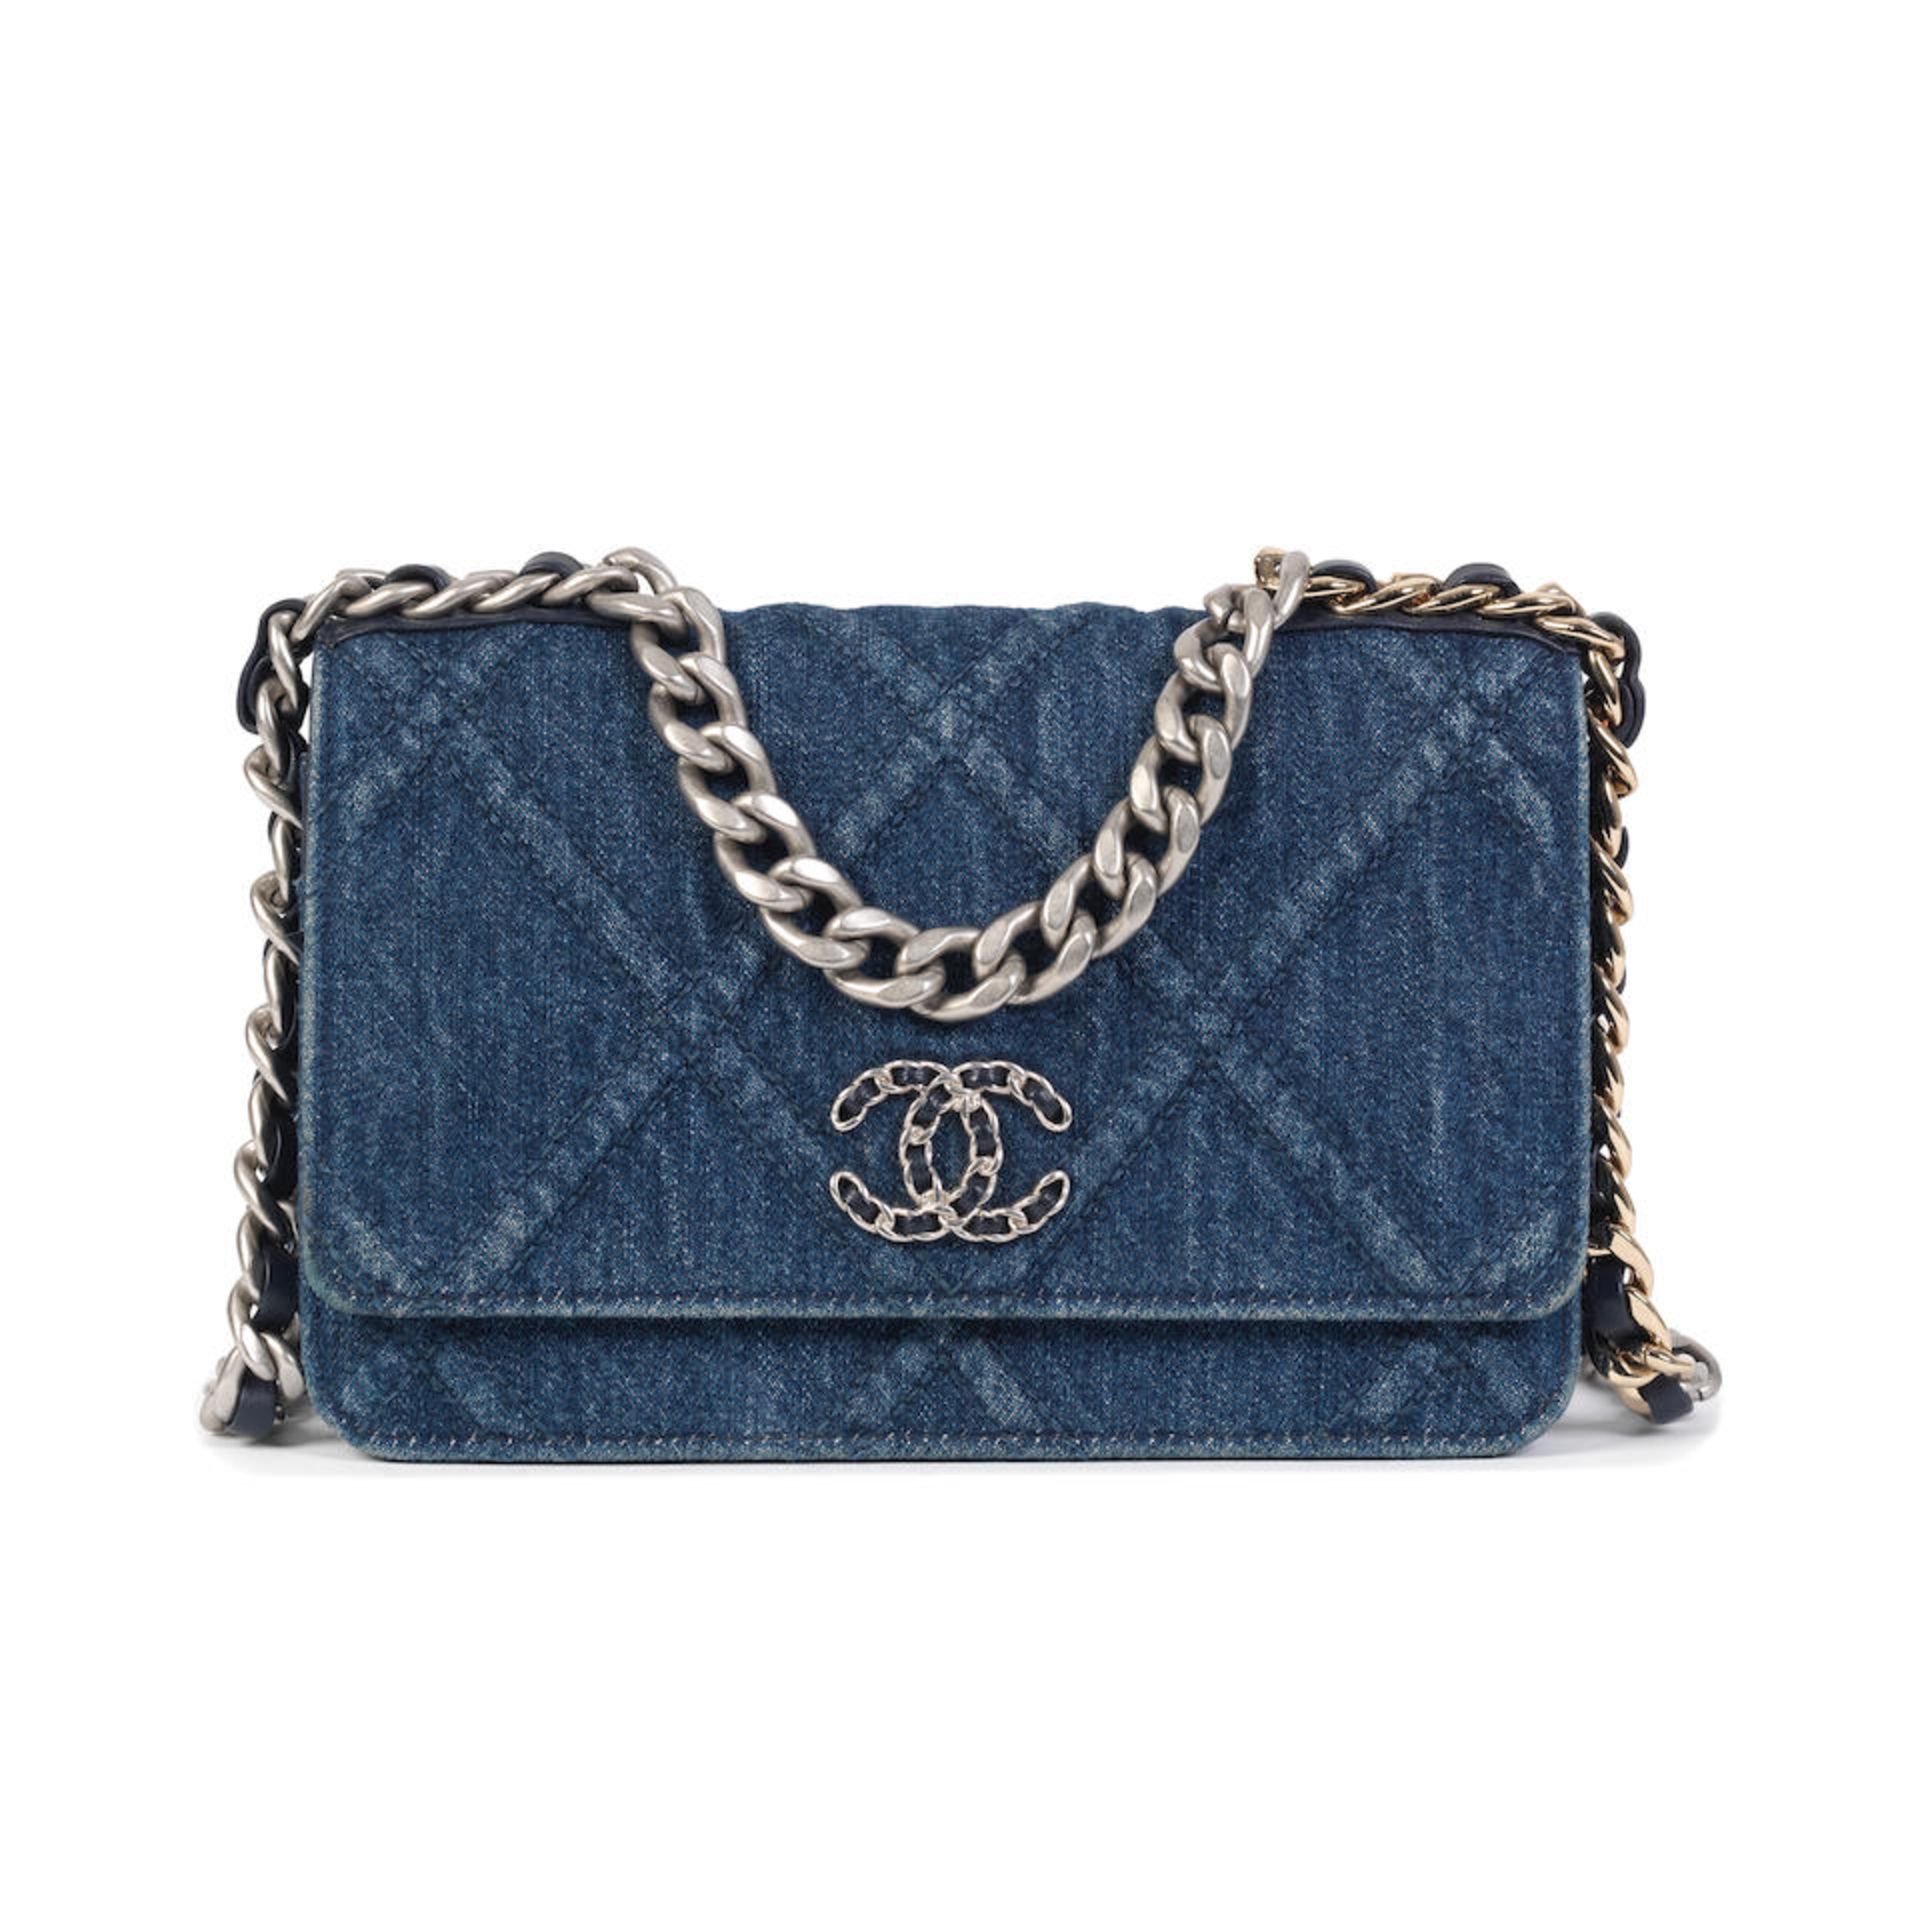 Virginie Viard for Chanel: a Blue Denim 19 Wallet on Chain (WOC) 2022